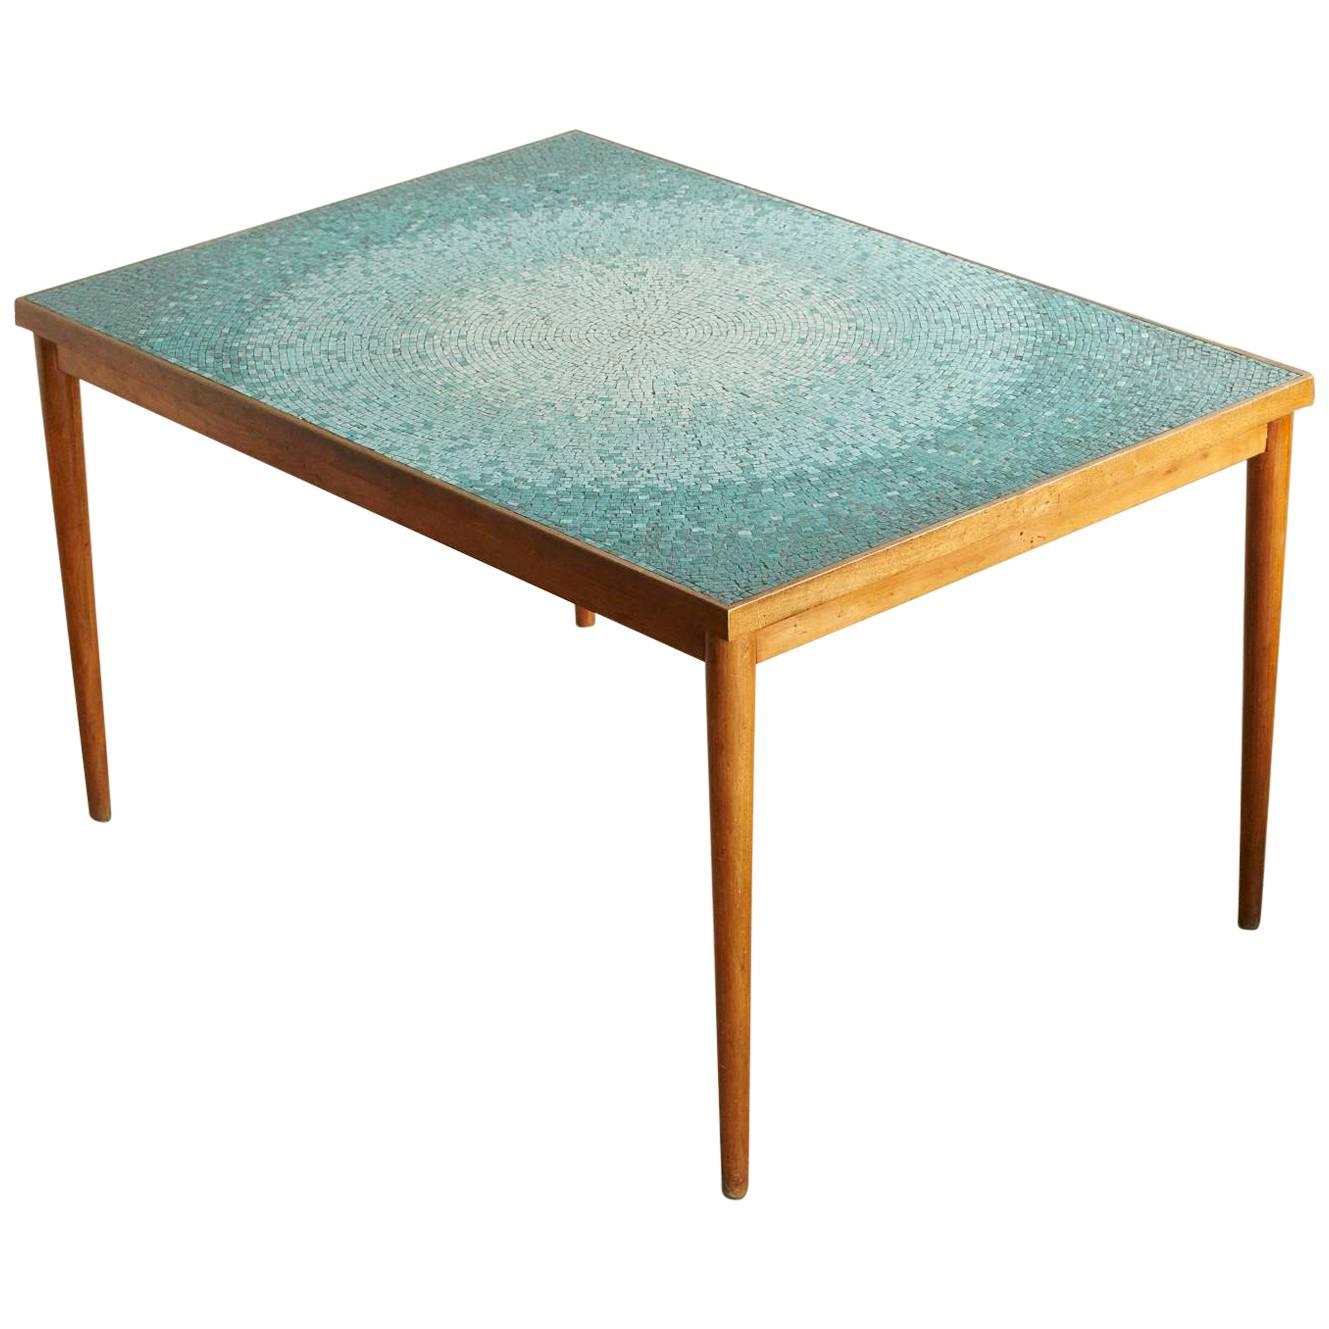 Aquamarine Mosaic Tile Table Attributed to Gordon Martz, Marshall Studio